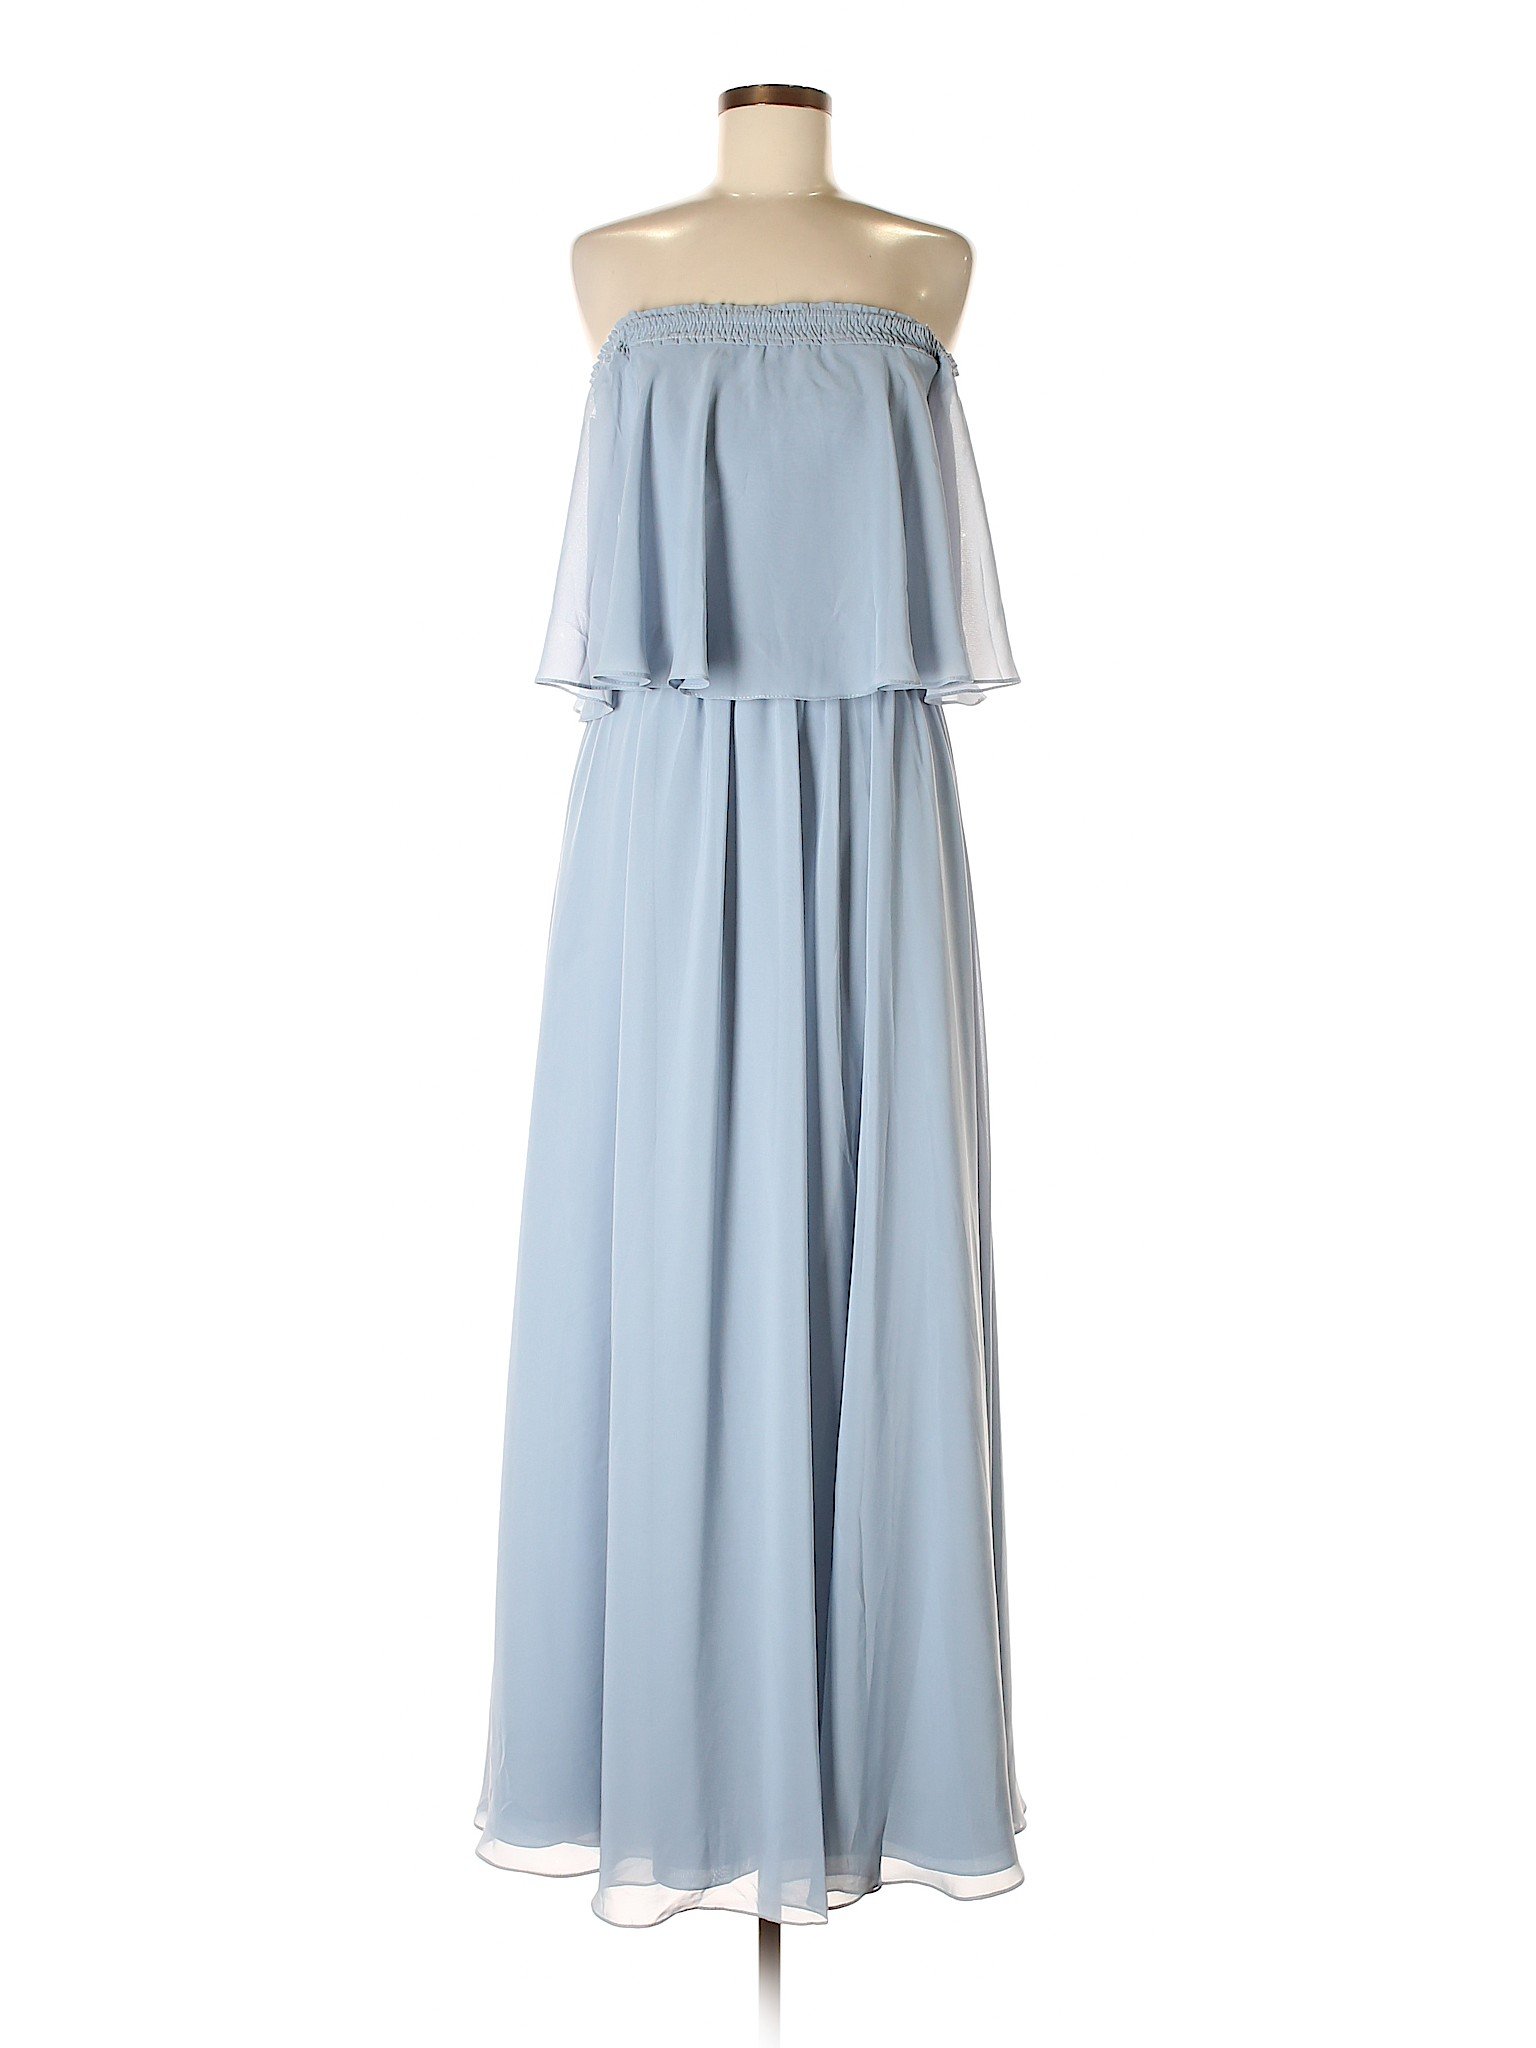 NWT JJ's House Women Blue Cocktail Dress 2 | eBay